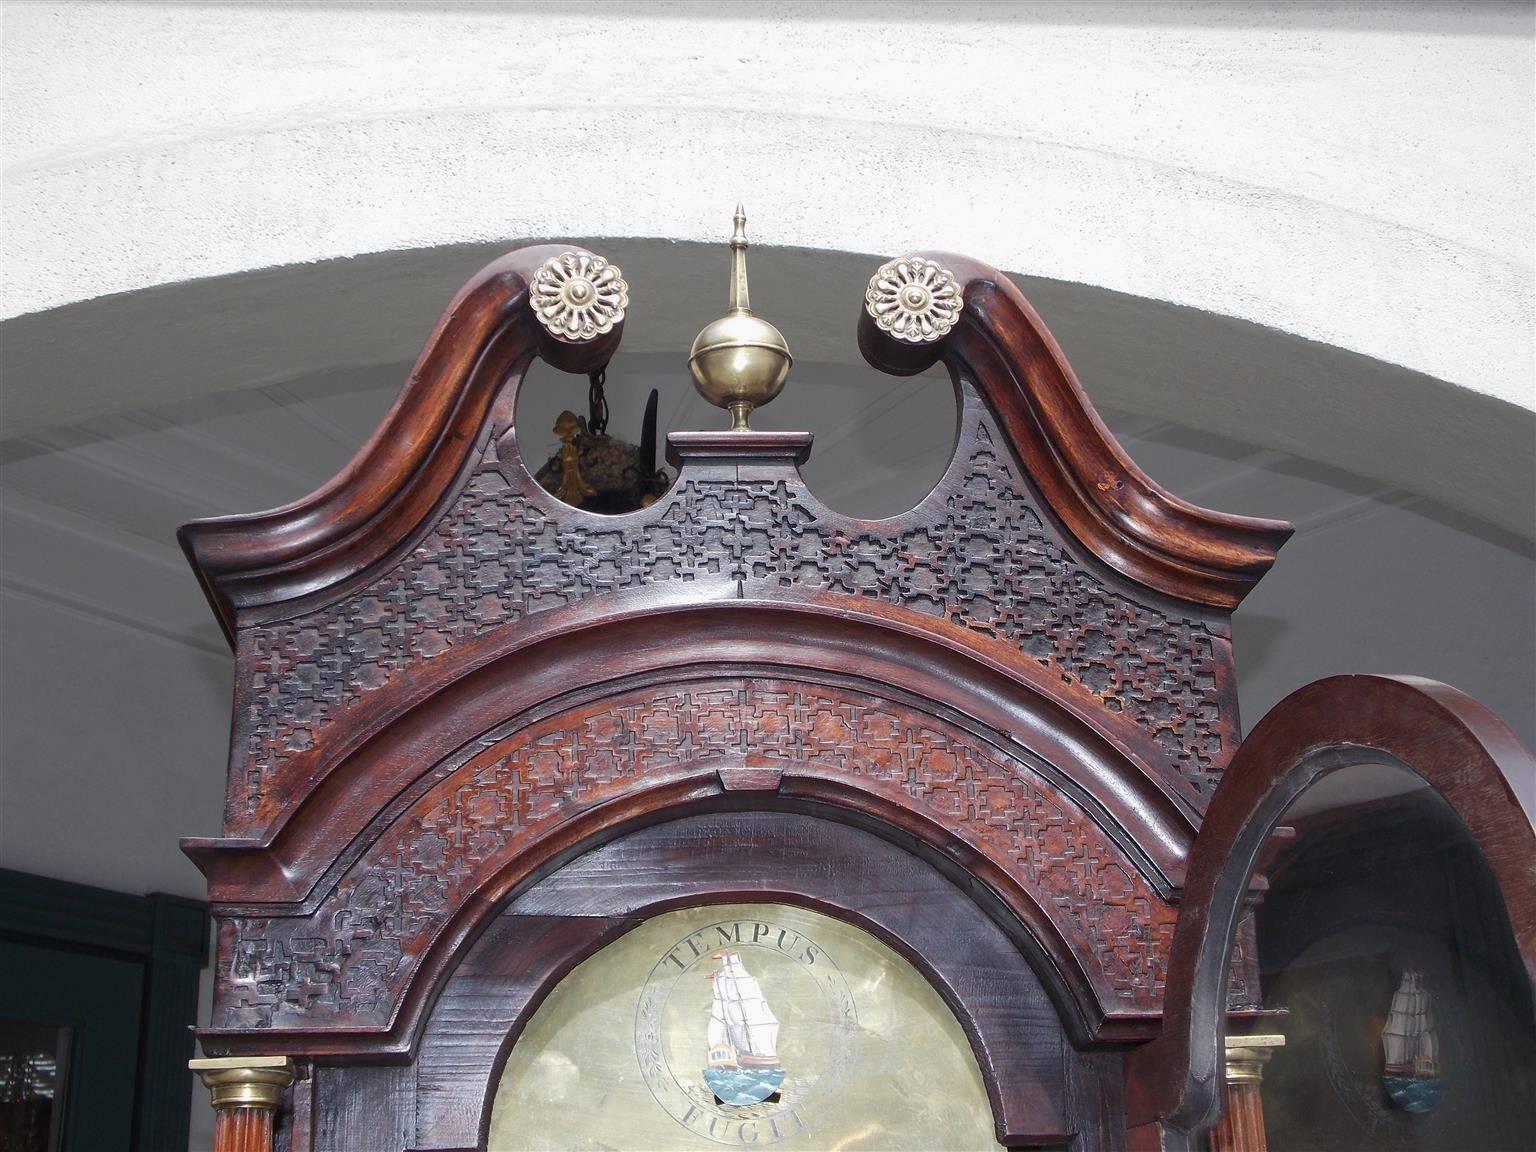 Cast English Chippendale Mahogany Fret Work Tall Case Clock, Baxter, Bristol, C.1770